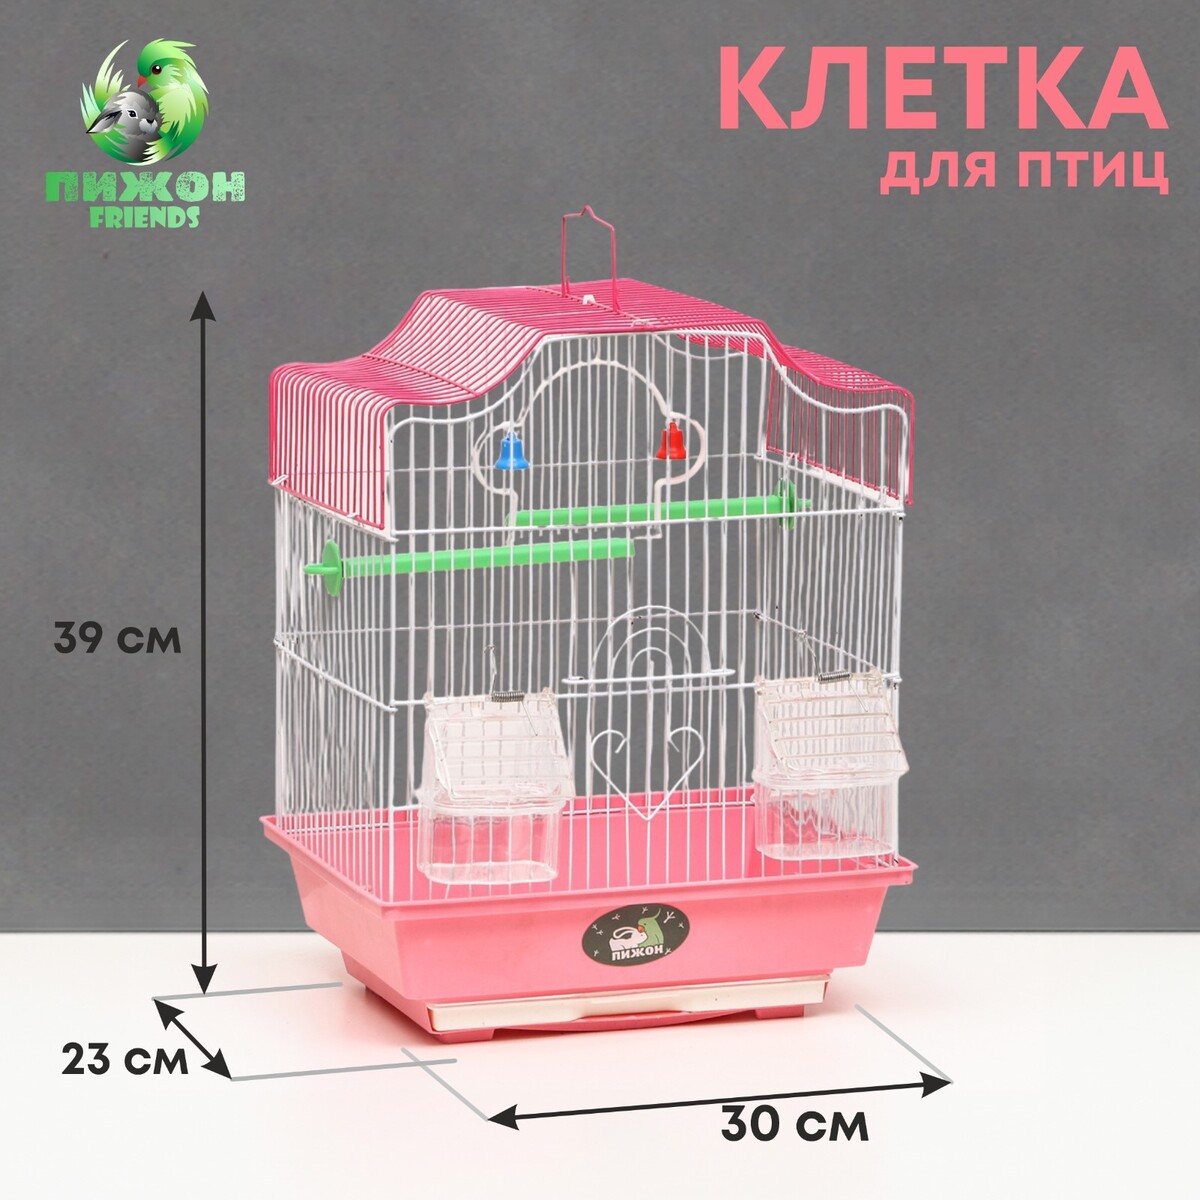 Клетка для птиц укомплектованная bd-1/4f, 30 х 23 х 39 см, розовая клетка для грызунов укомплектованная 27 х 19 х 28 см розовая